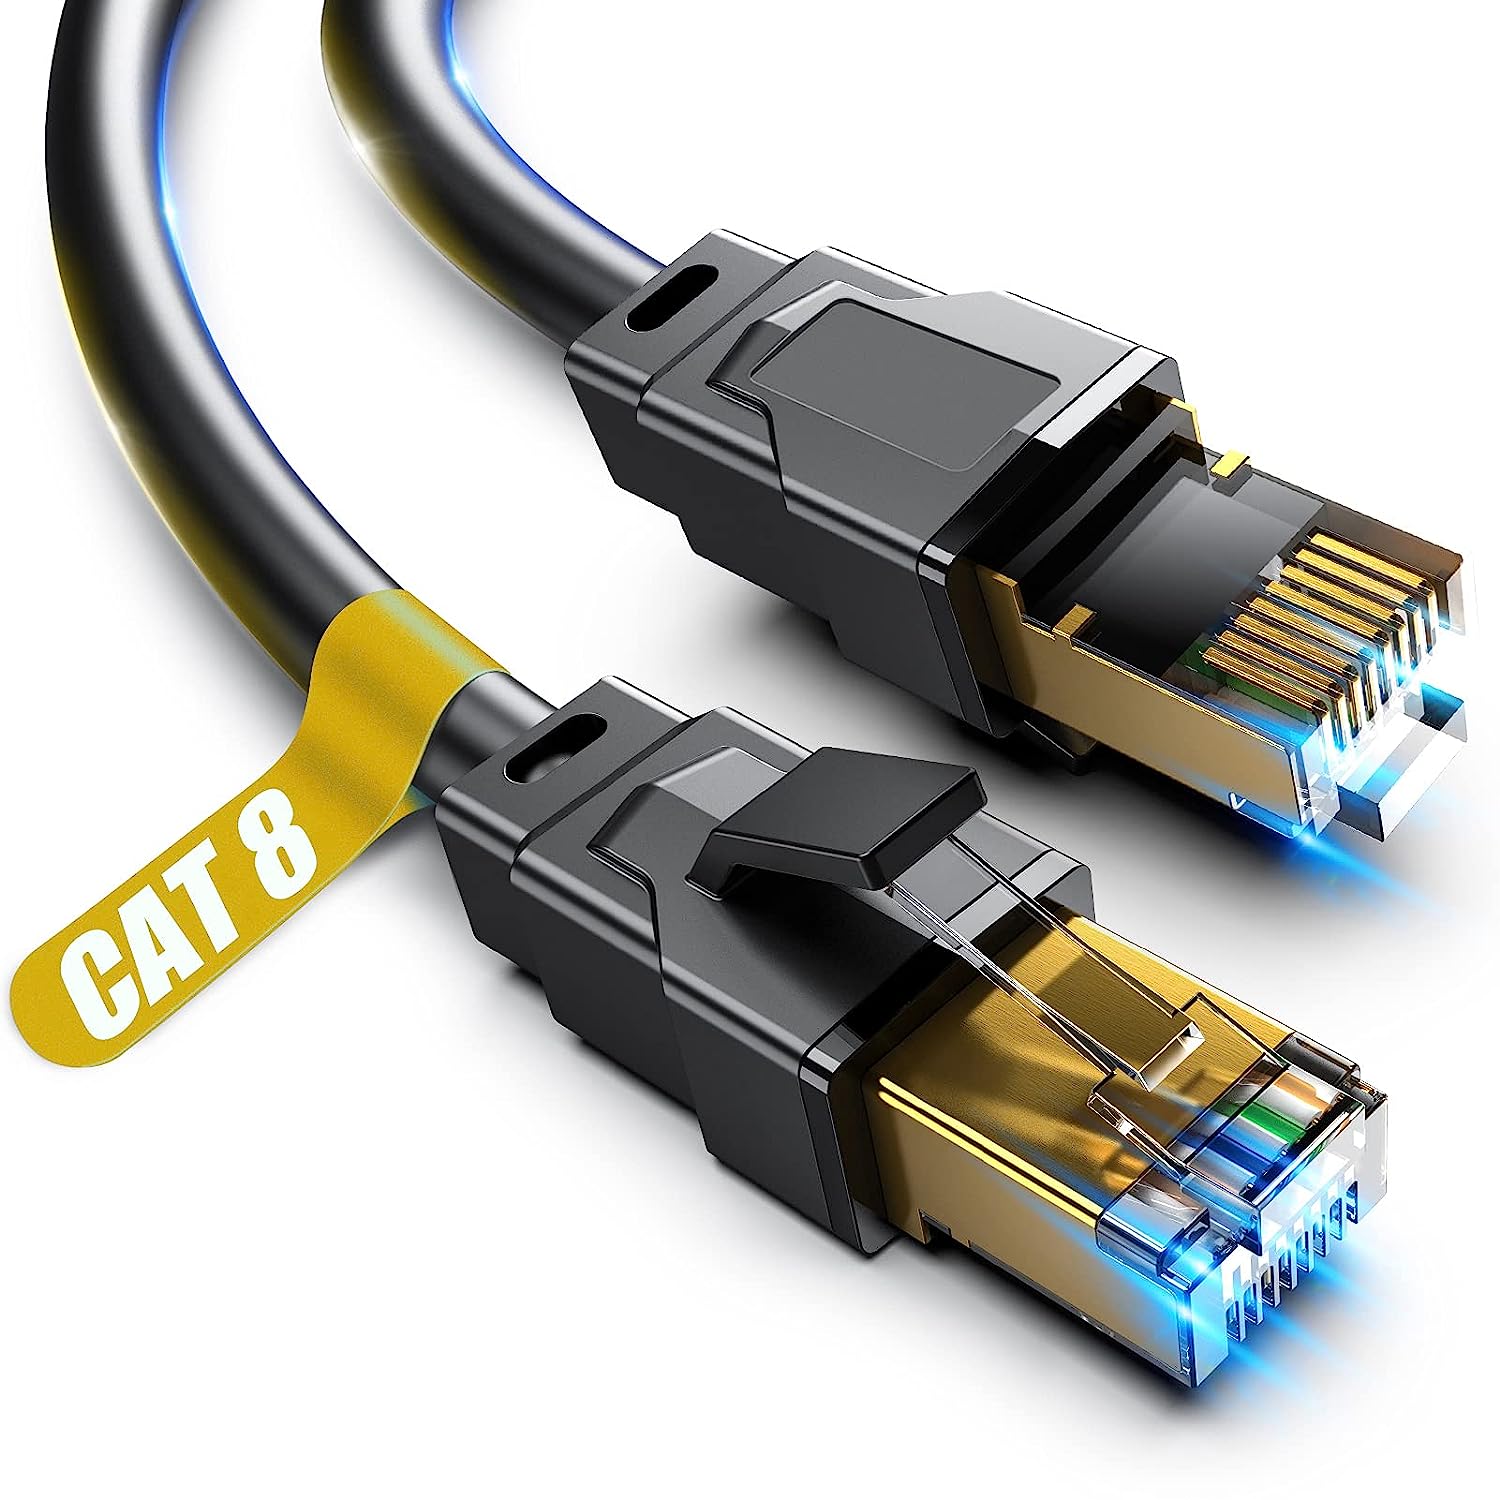 lan cable for internet comparison tables